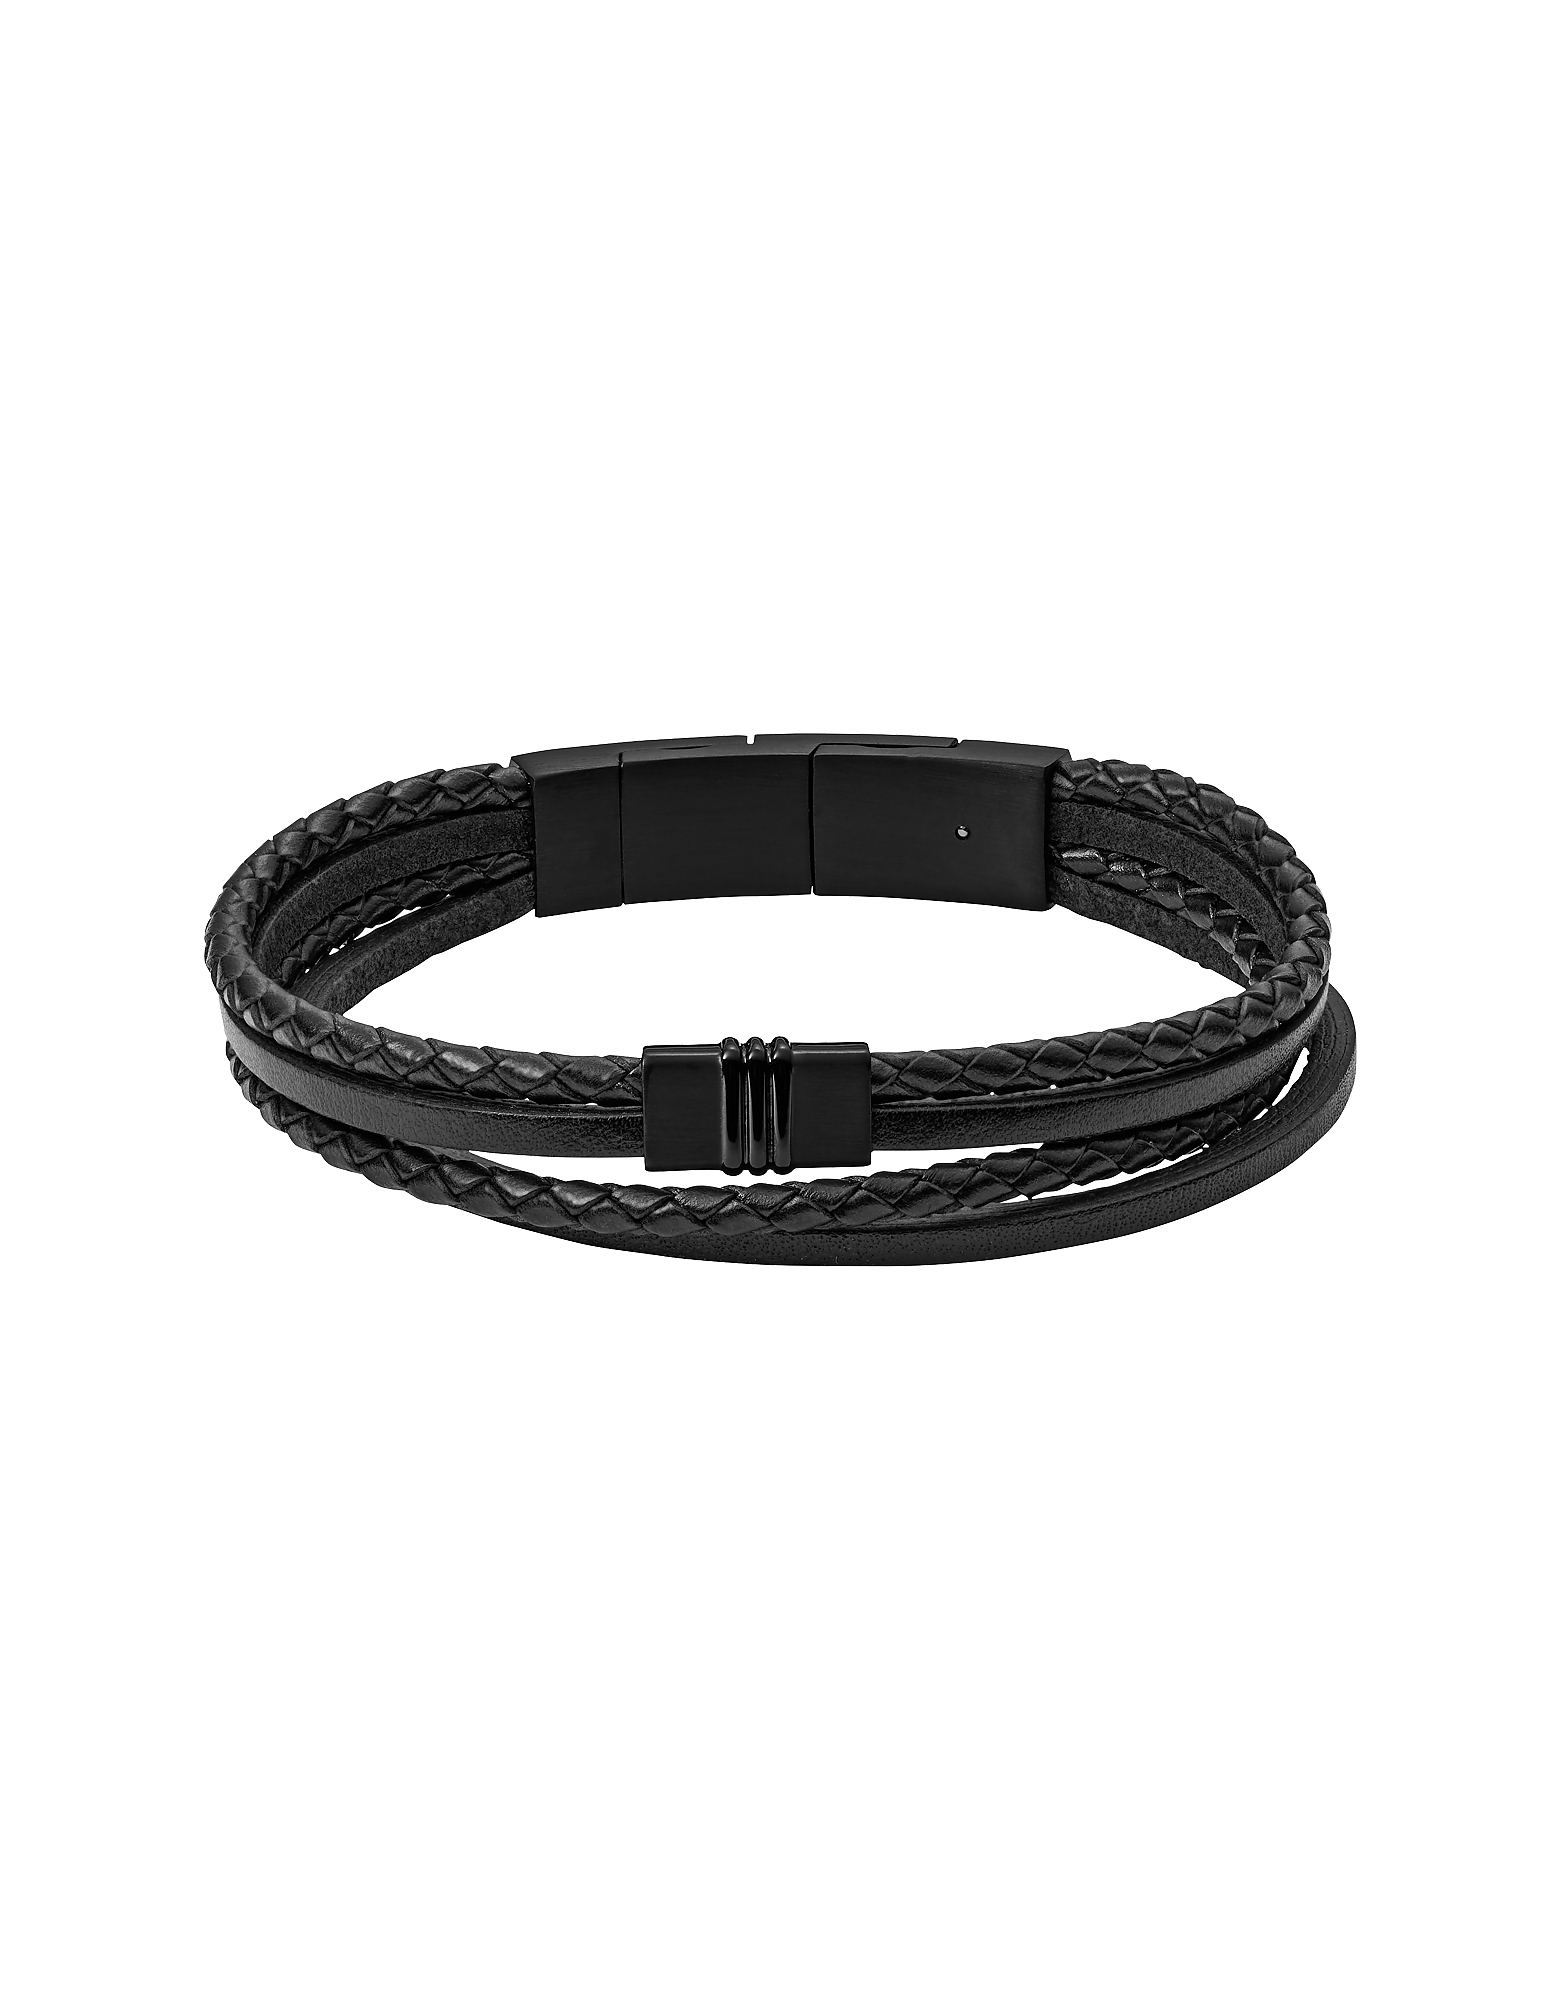 

Multi Strand Black Leather Bracelet